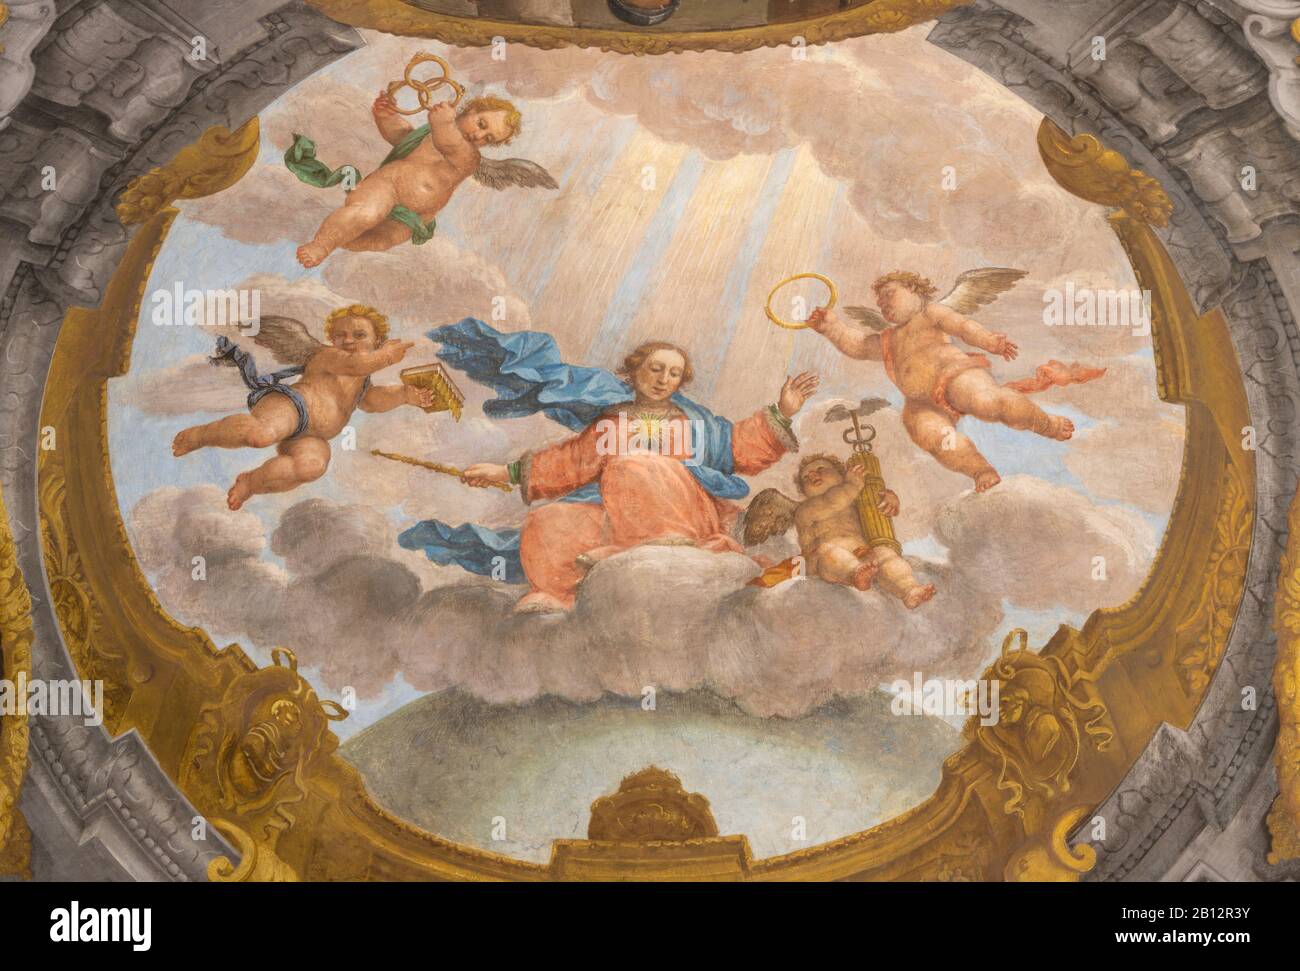 FERRARA, ITALY - JANUARY 30, 2020: The fresco of Madonna among the angels from ceiling of church Basilica di San Giorgio fuori le mura. Stock Photo